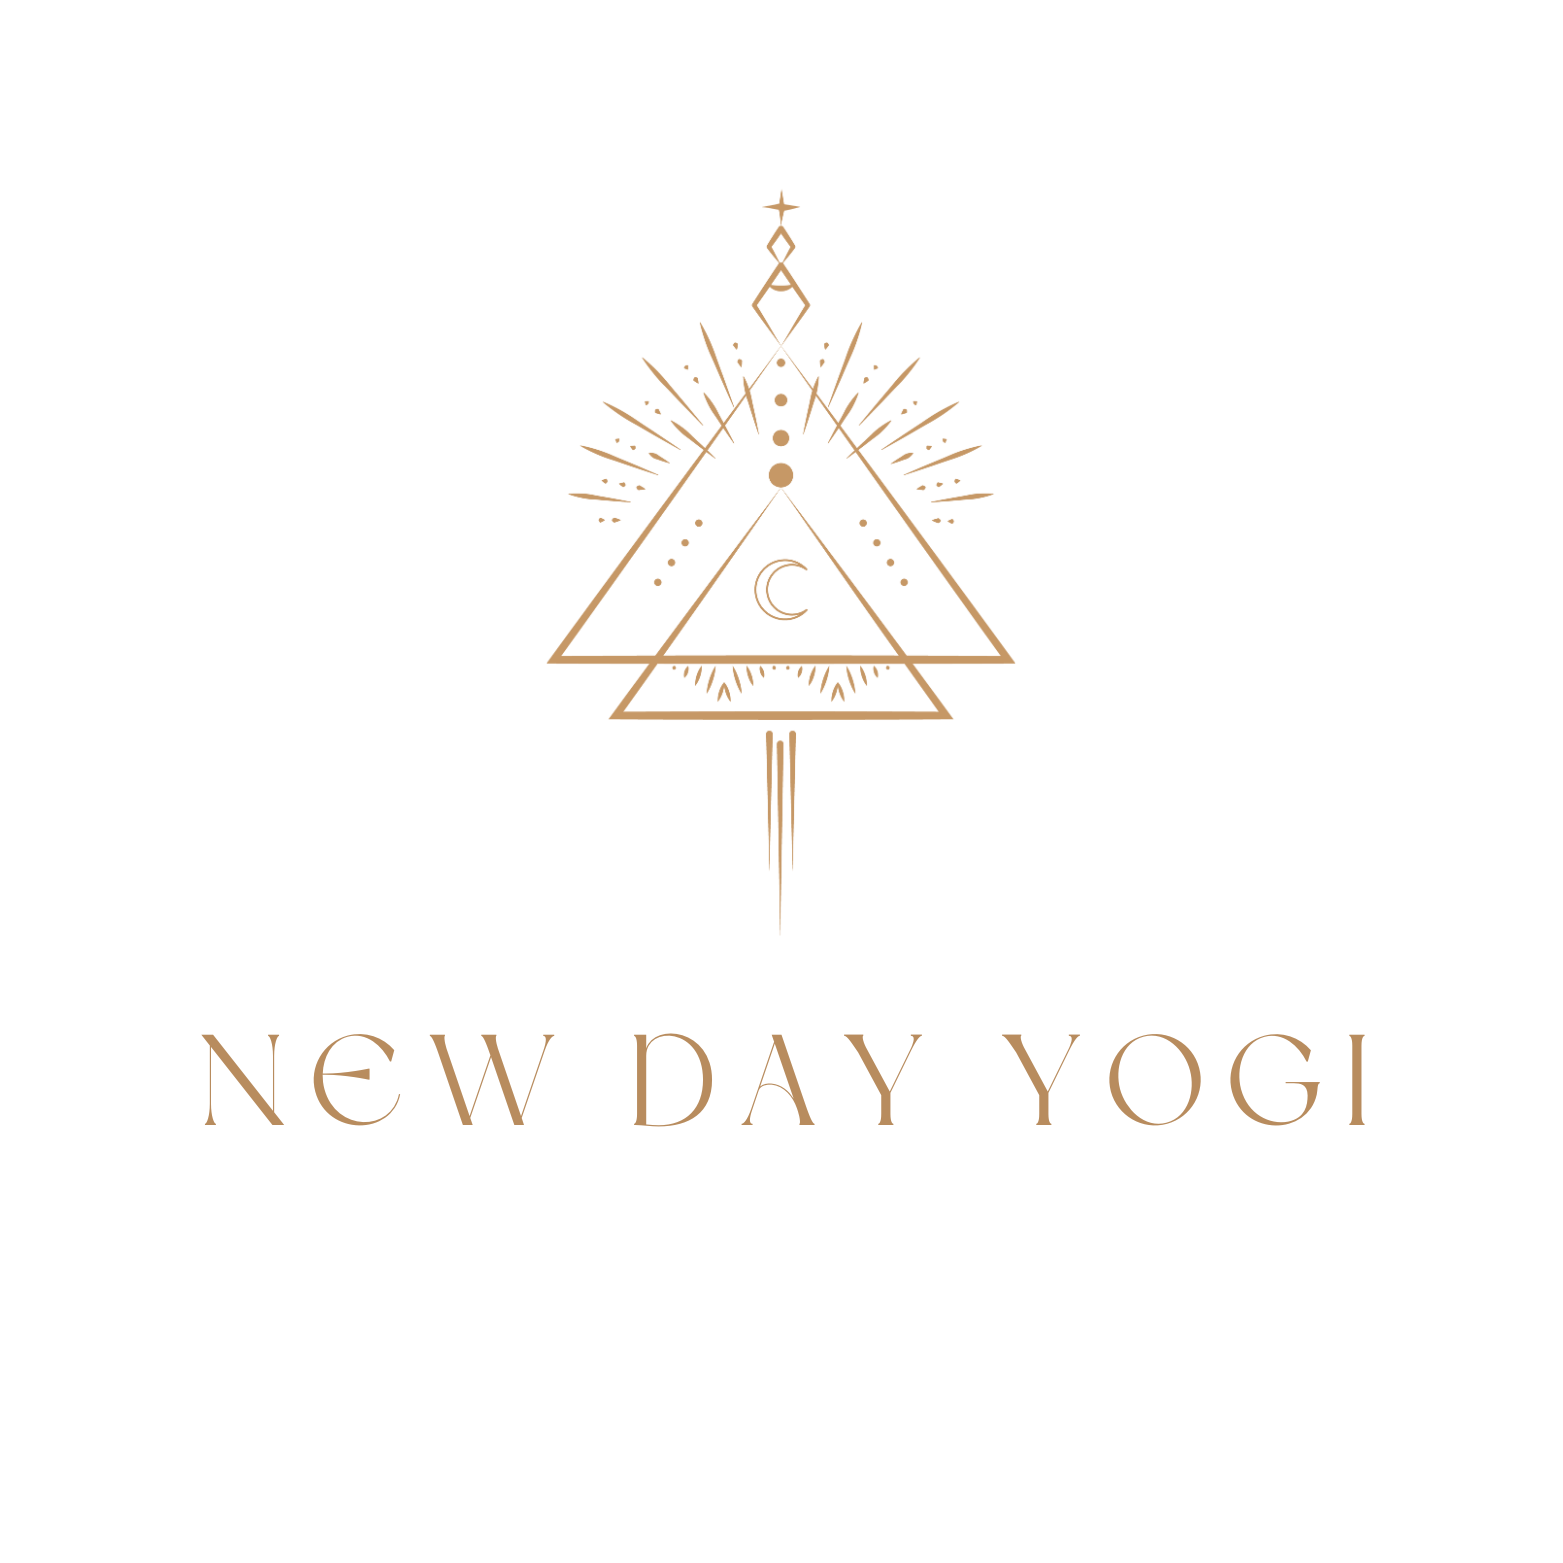 New Day Yogi